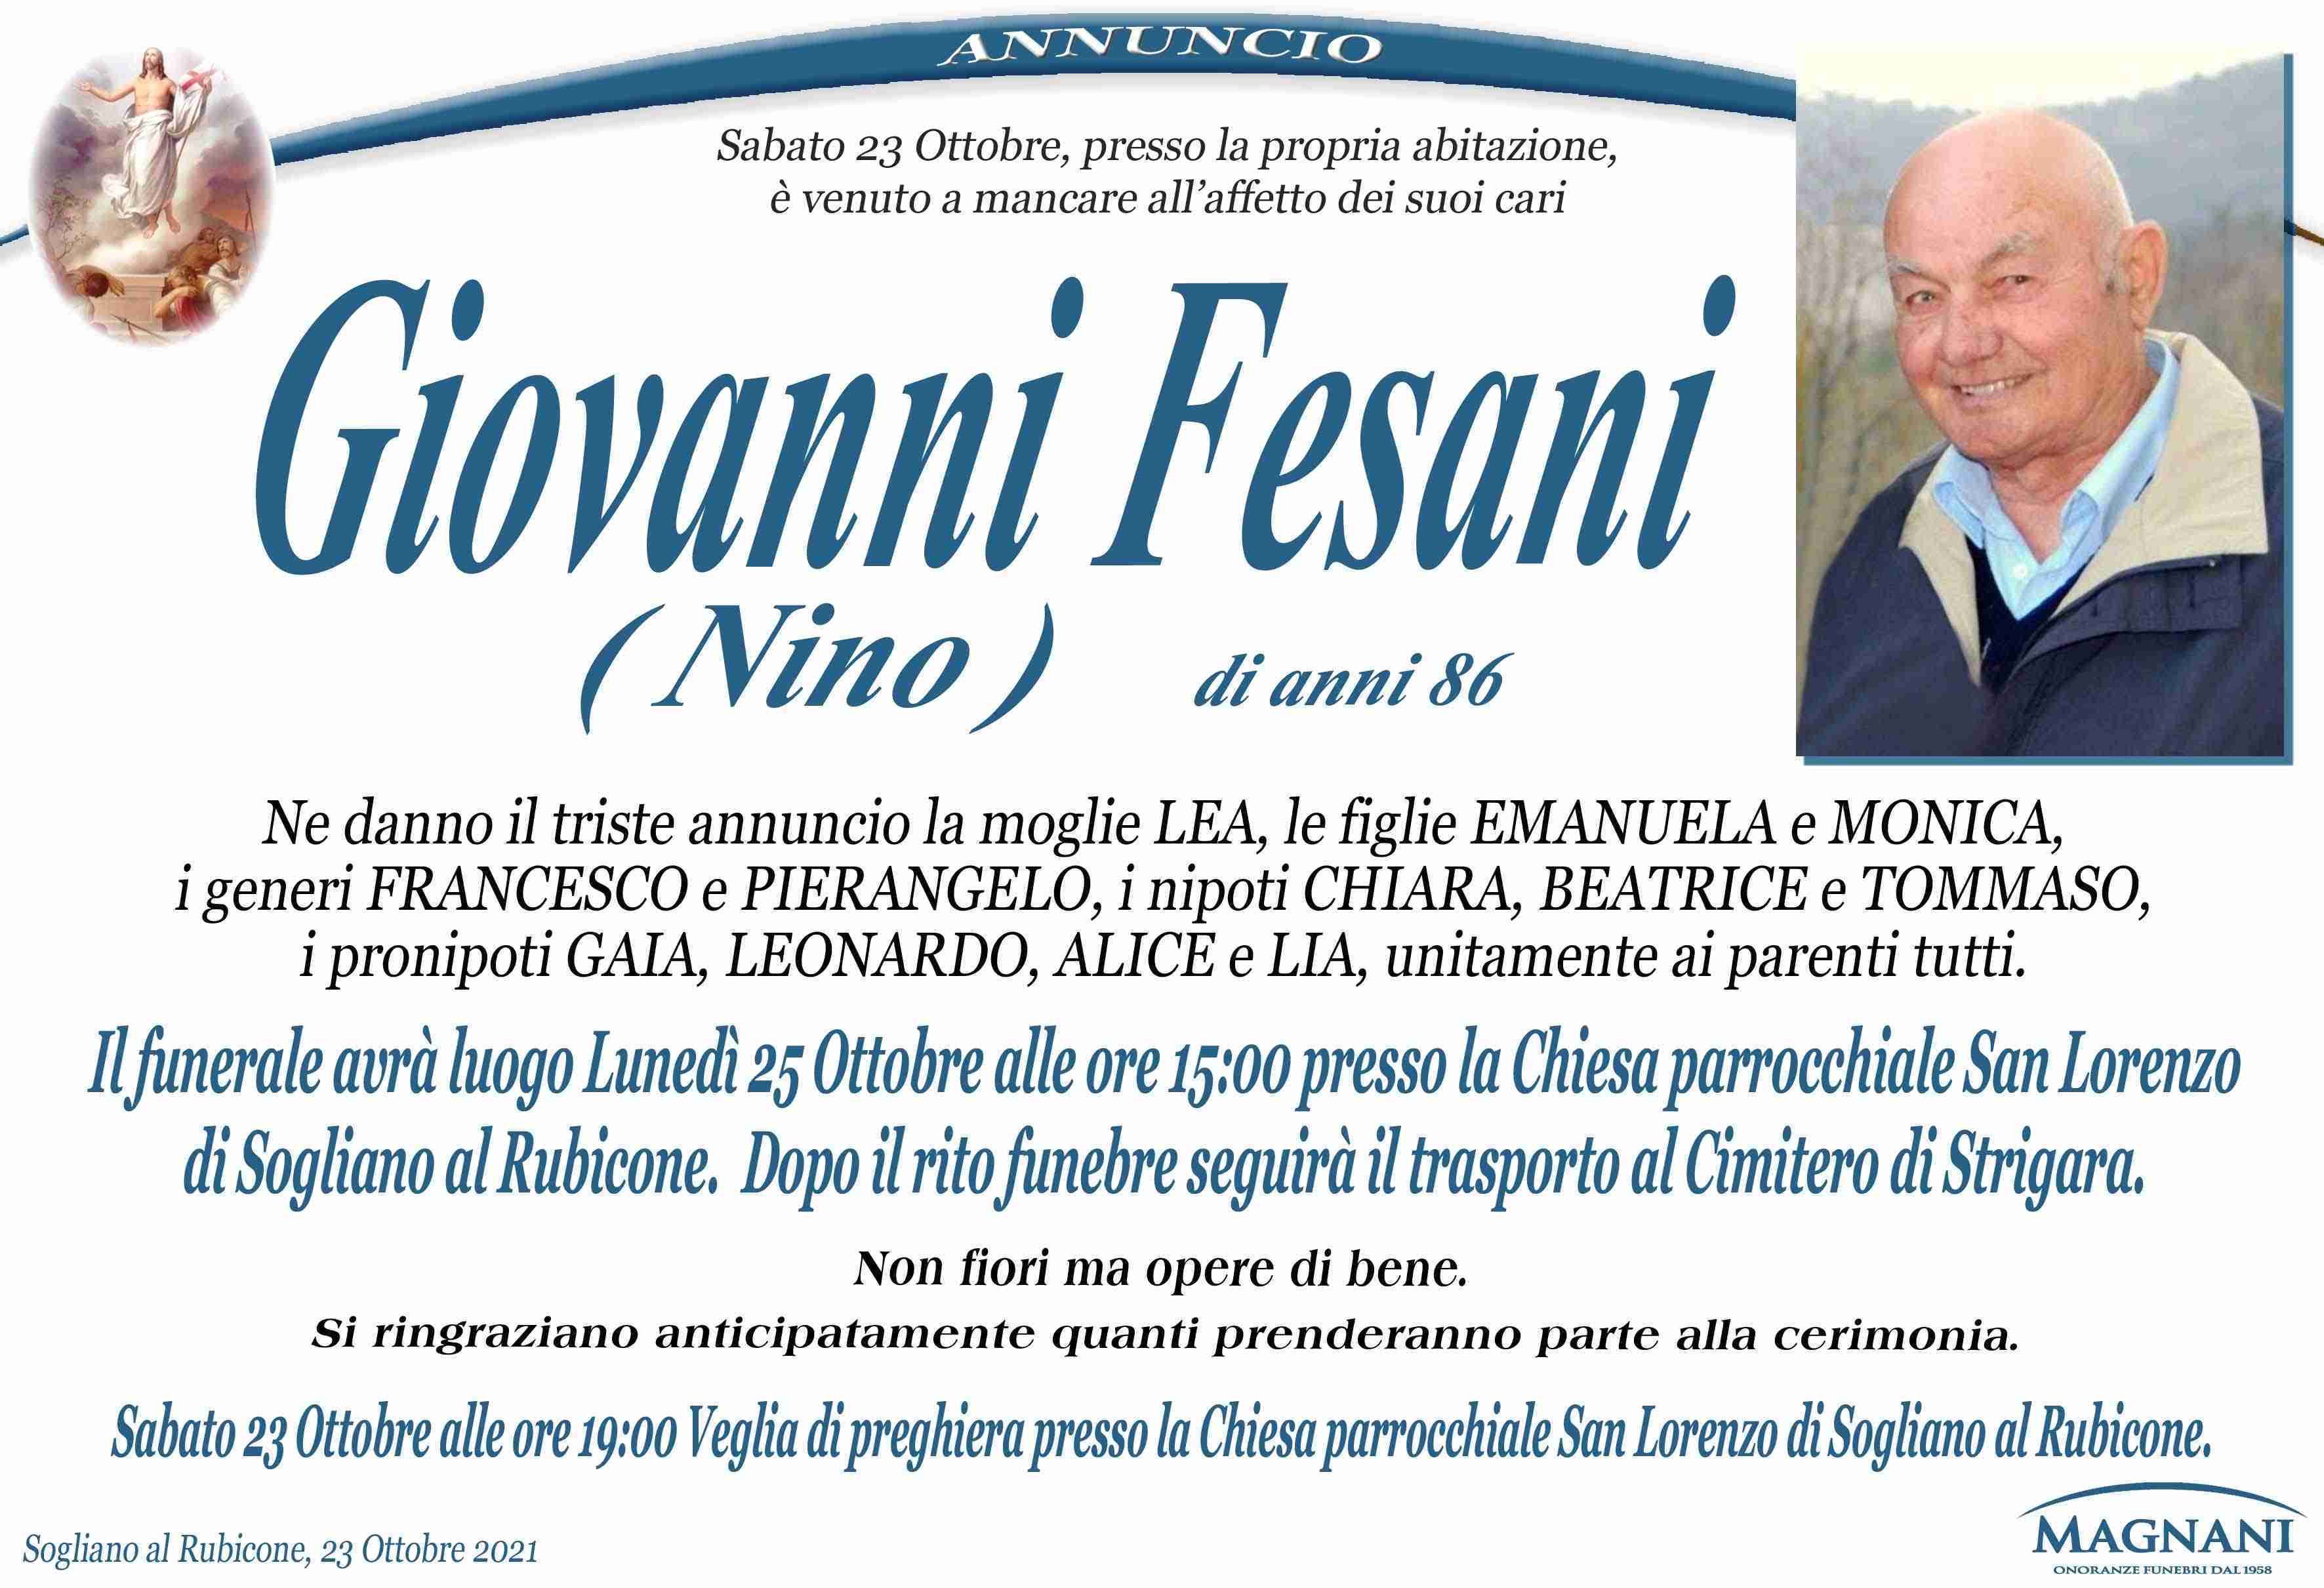 Giovanni Fesani